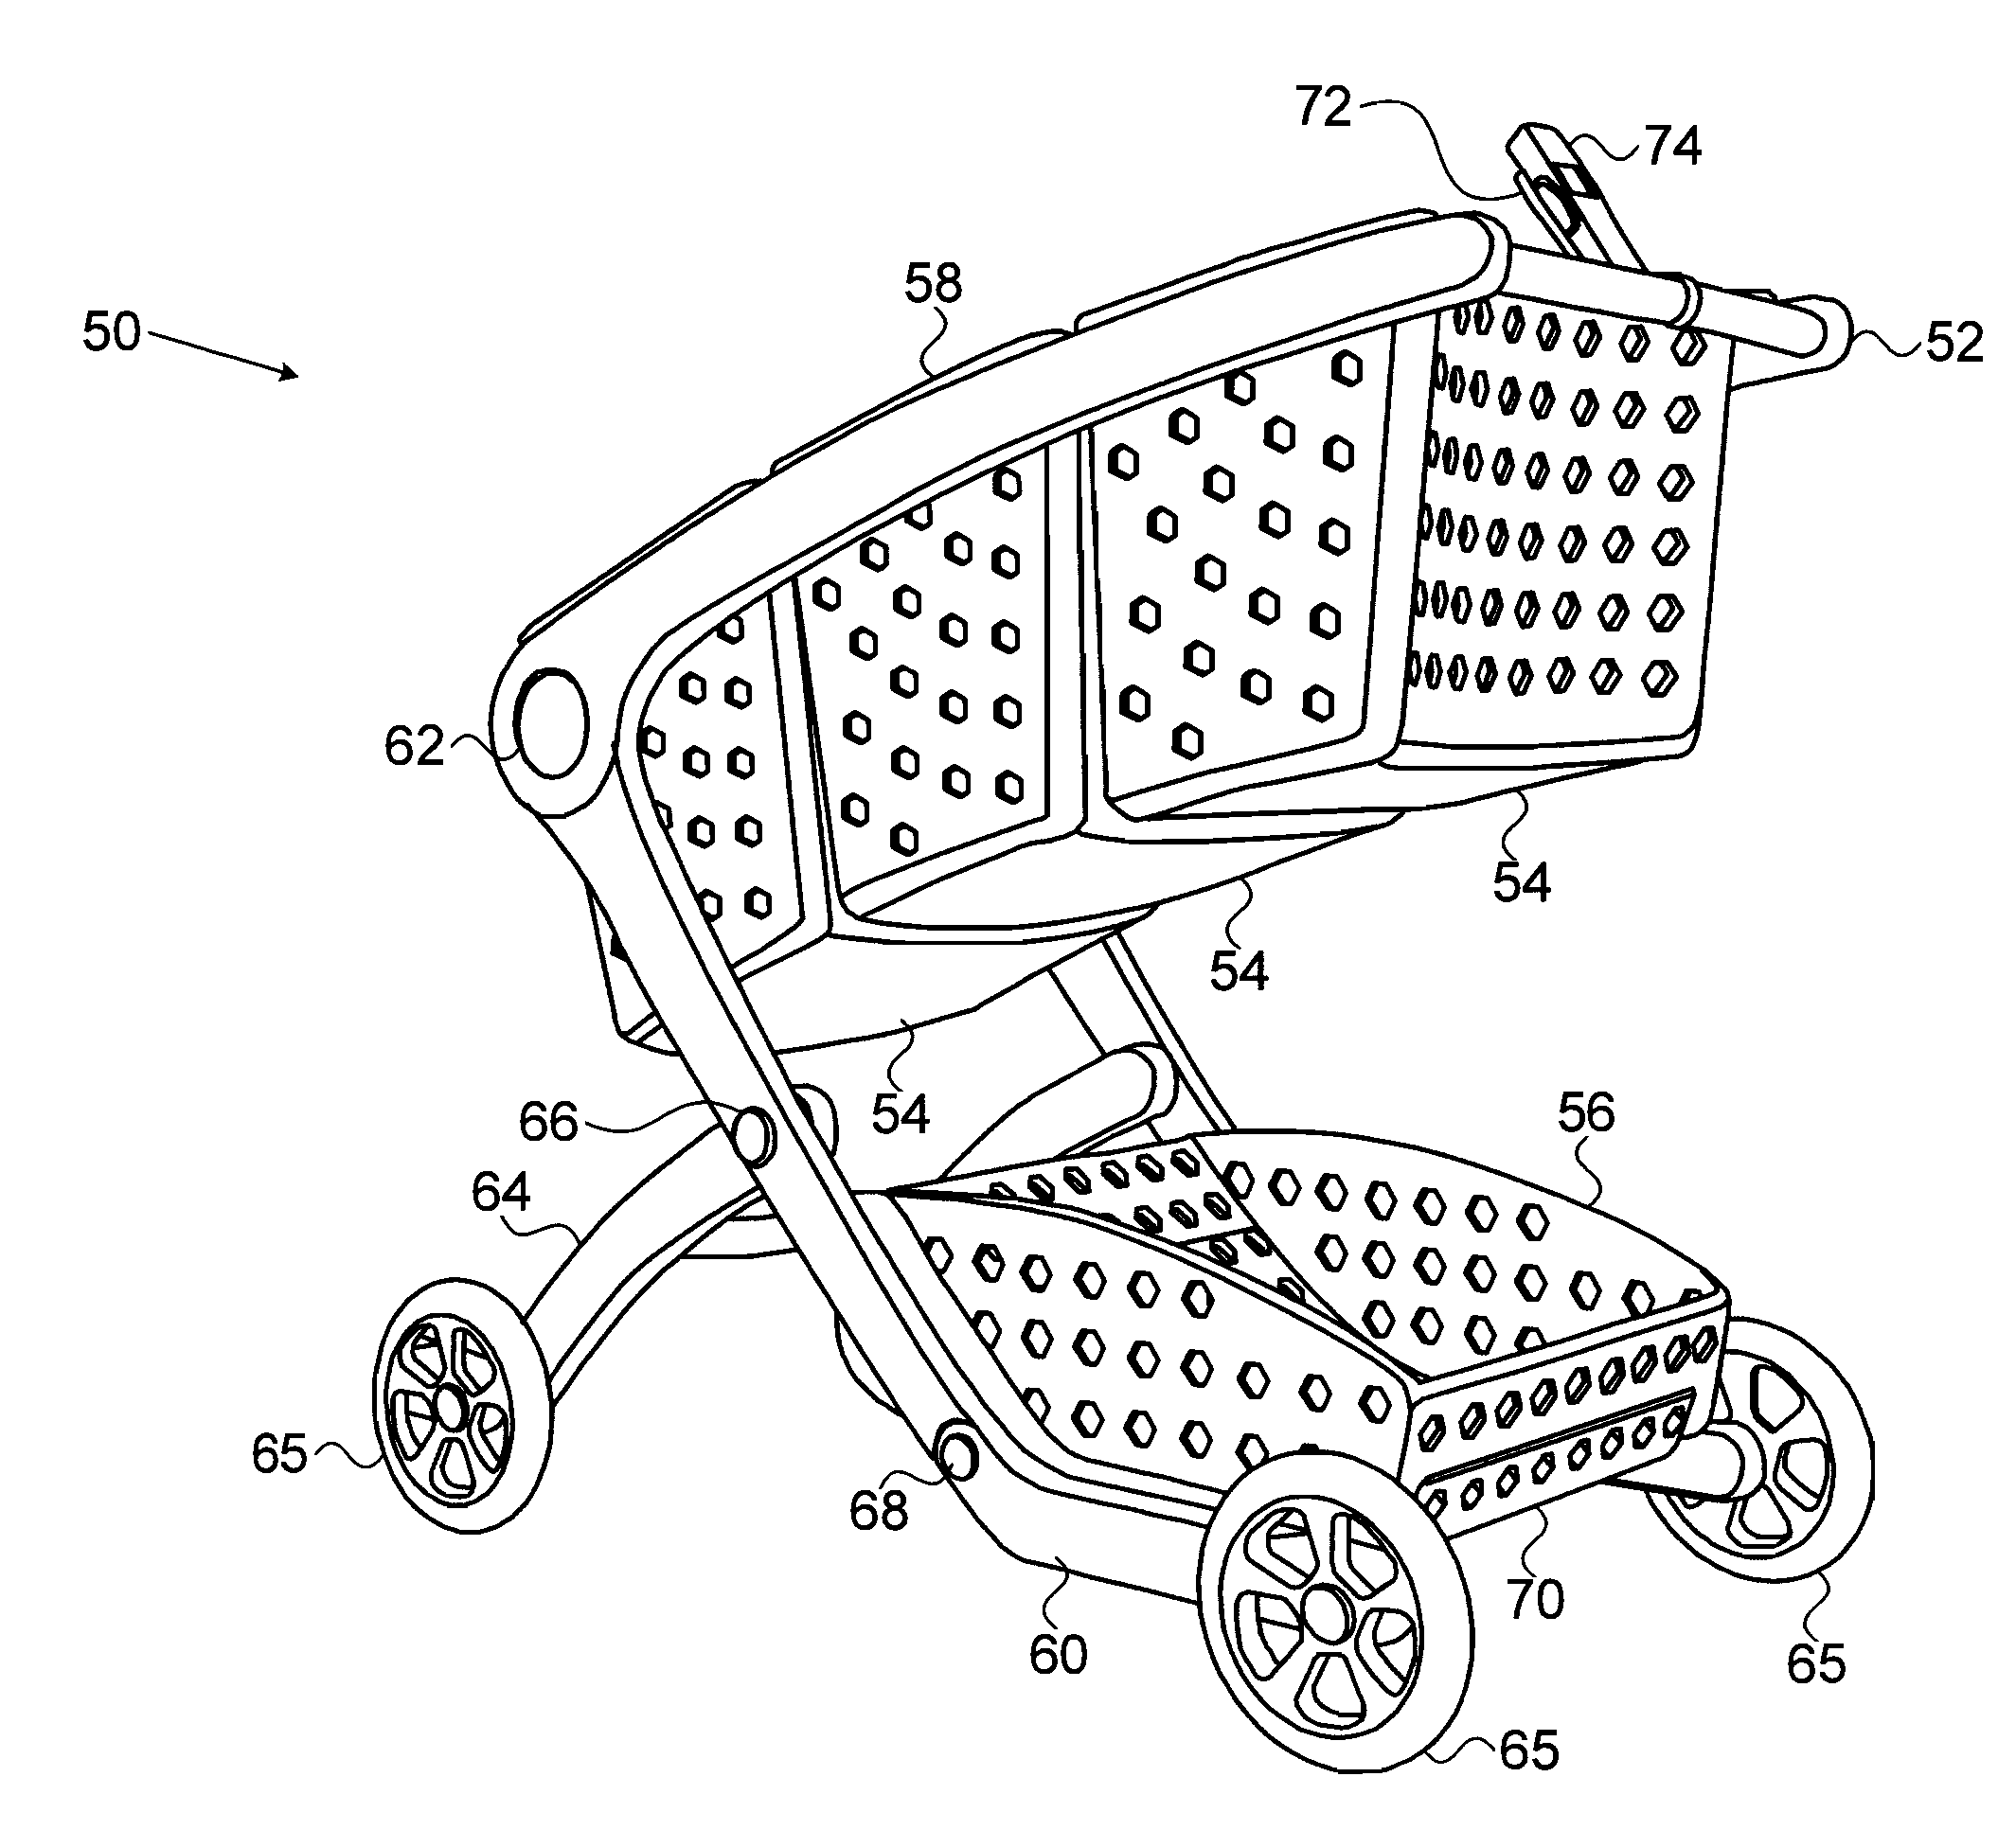 Modular shopping cart